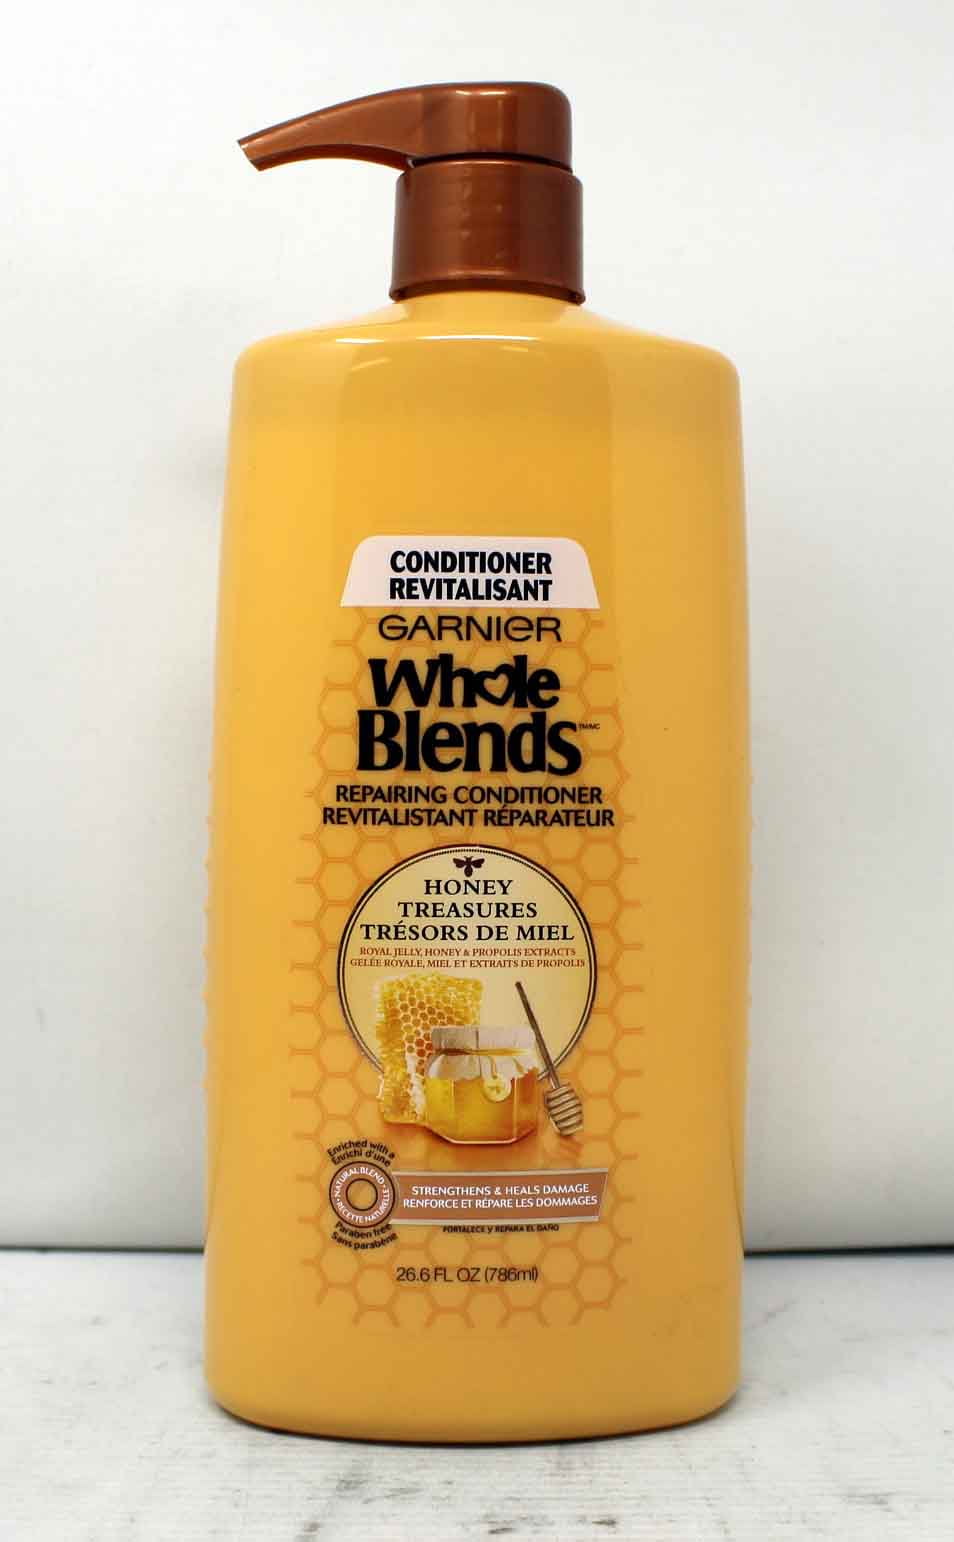 Garnier Whole Blends Honey Treasures Repairing Conditioner, For Dry Hair, 26.6 fl oz